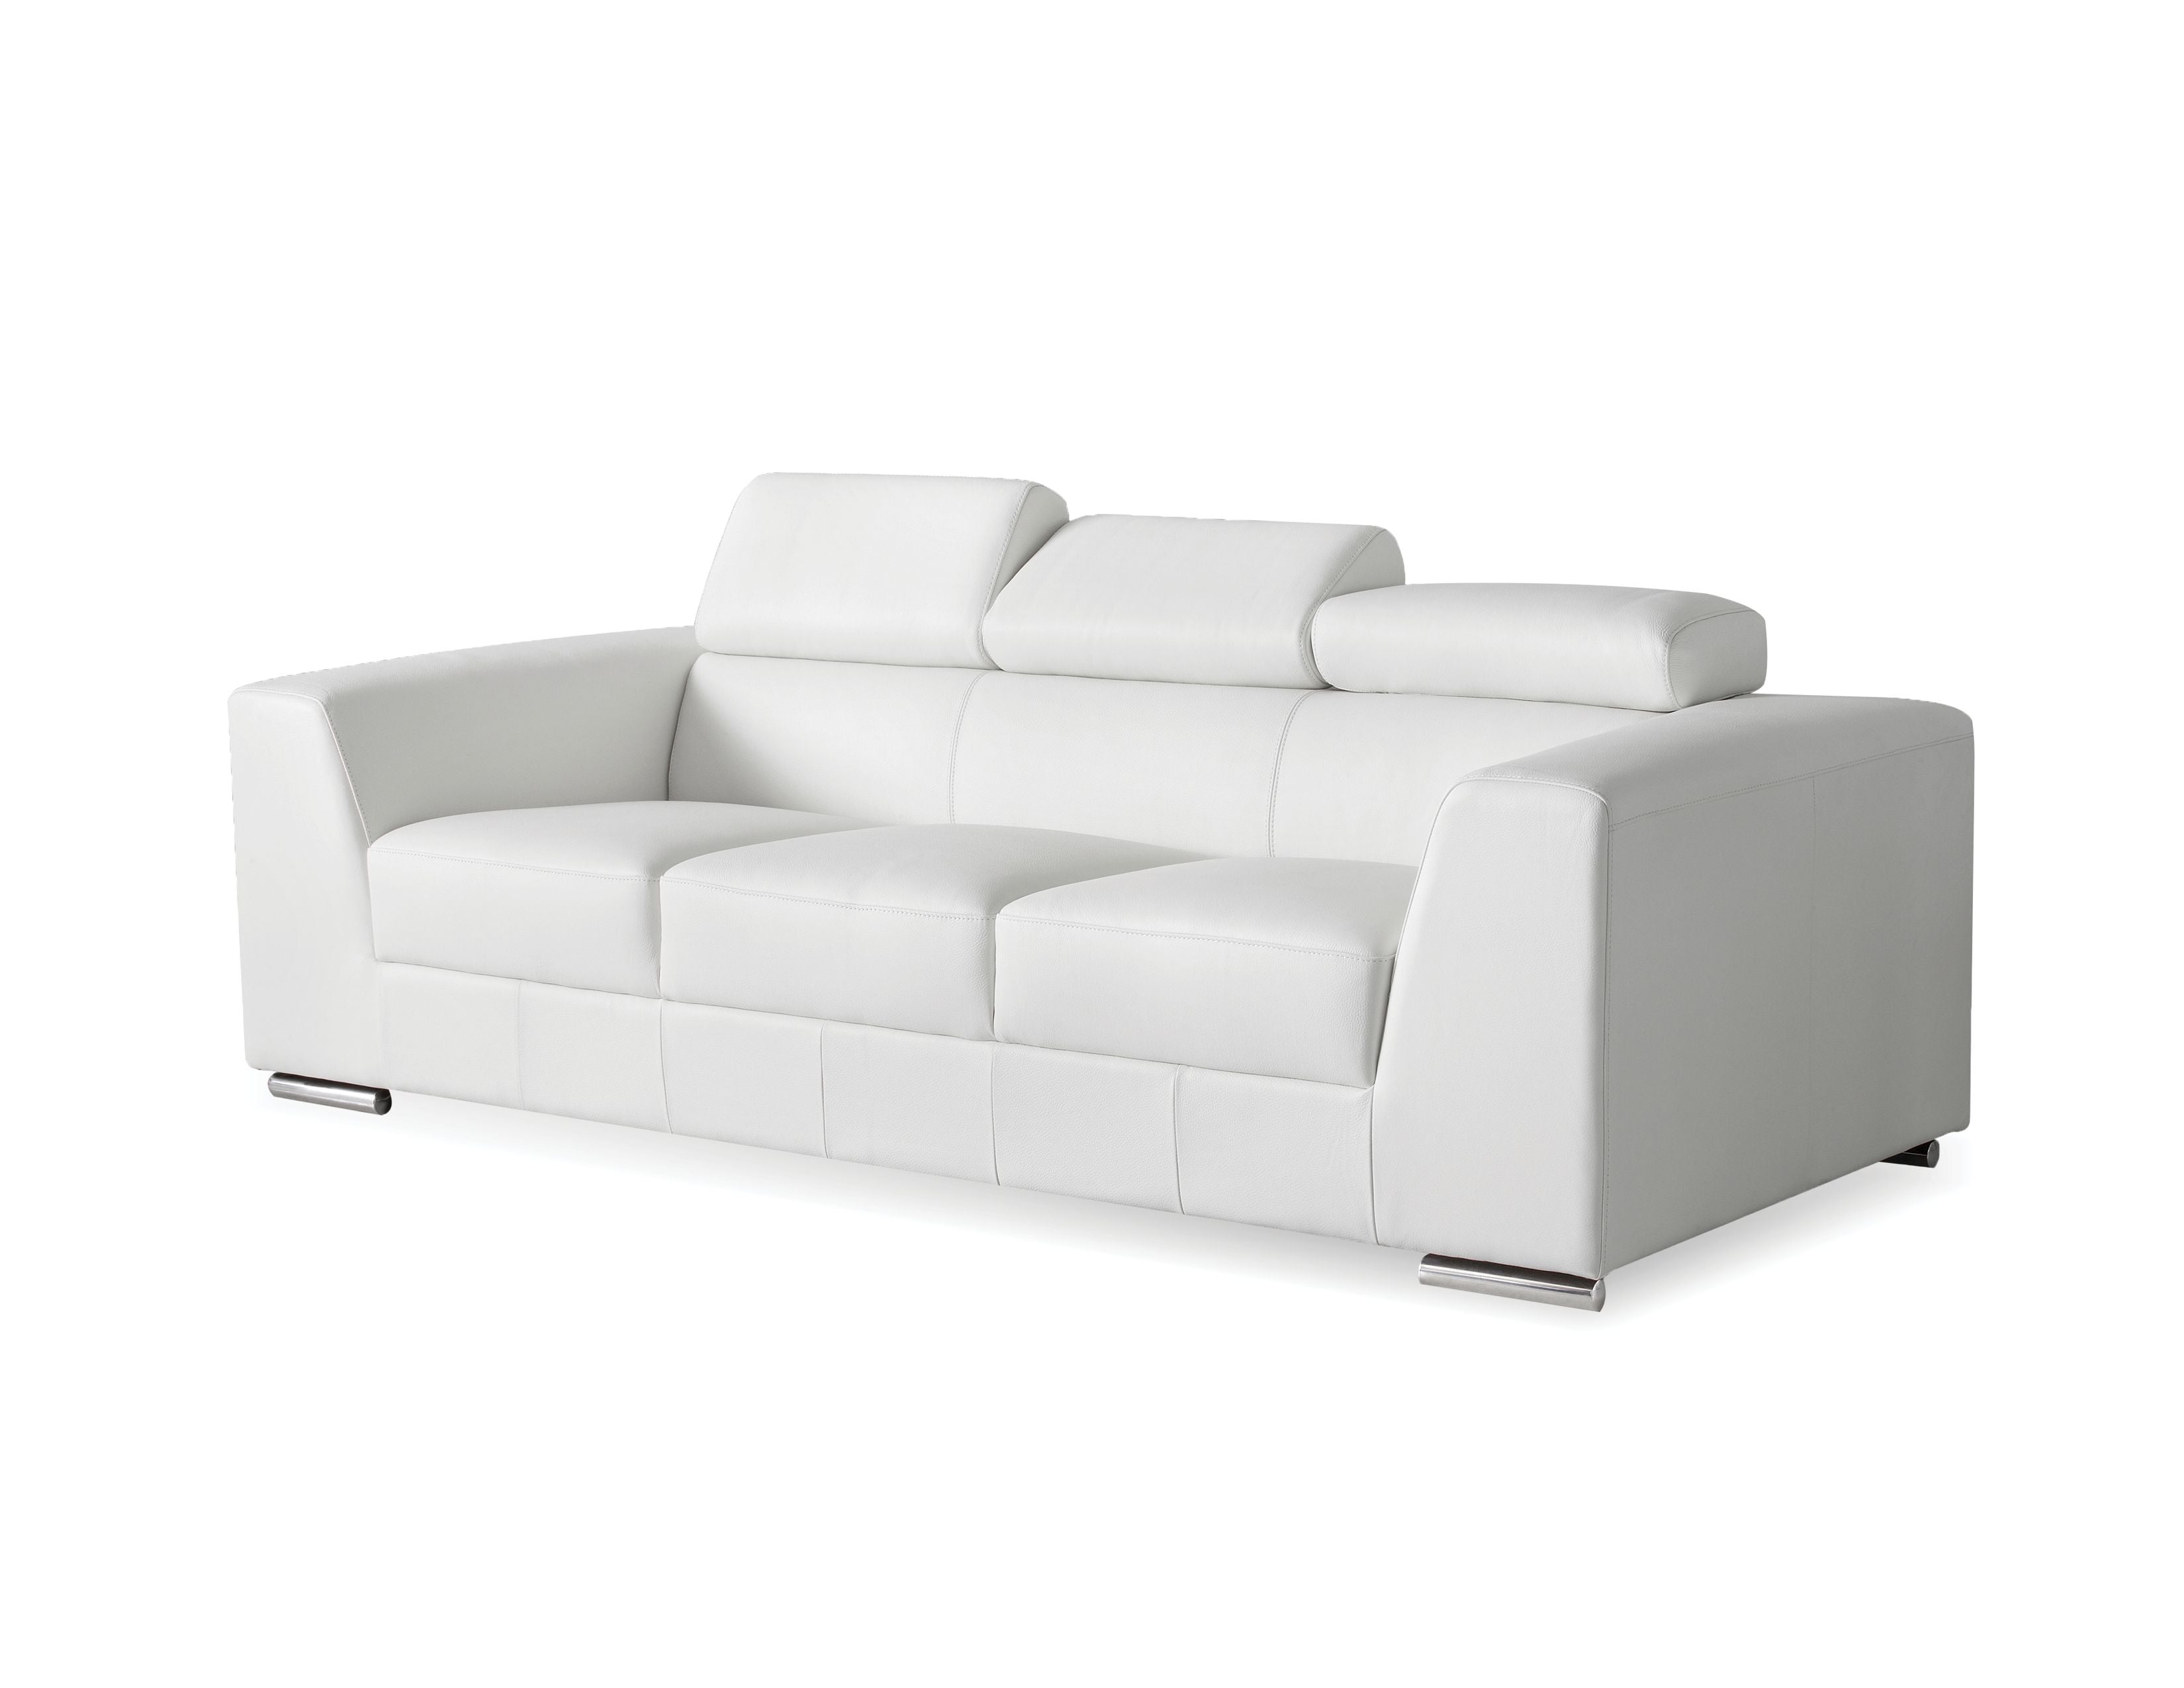 ICON Leather Sofa in White